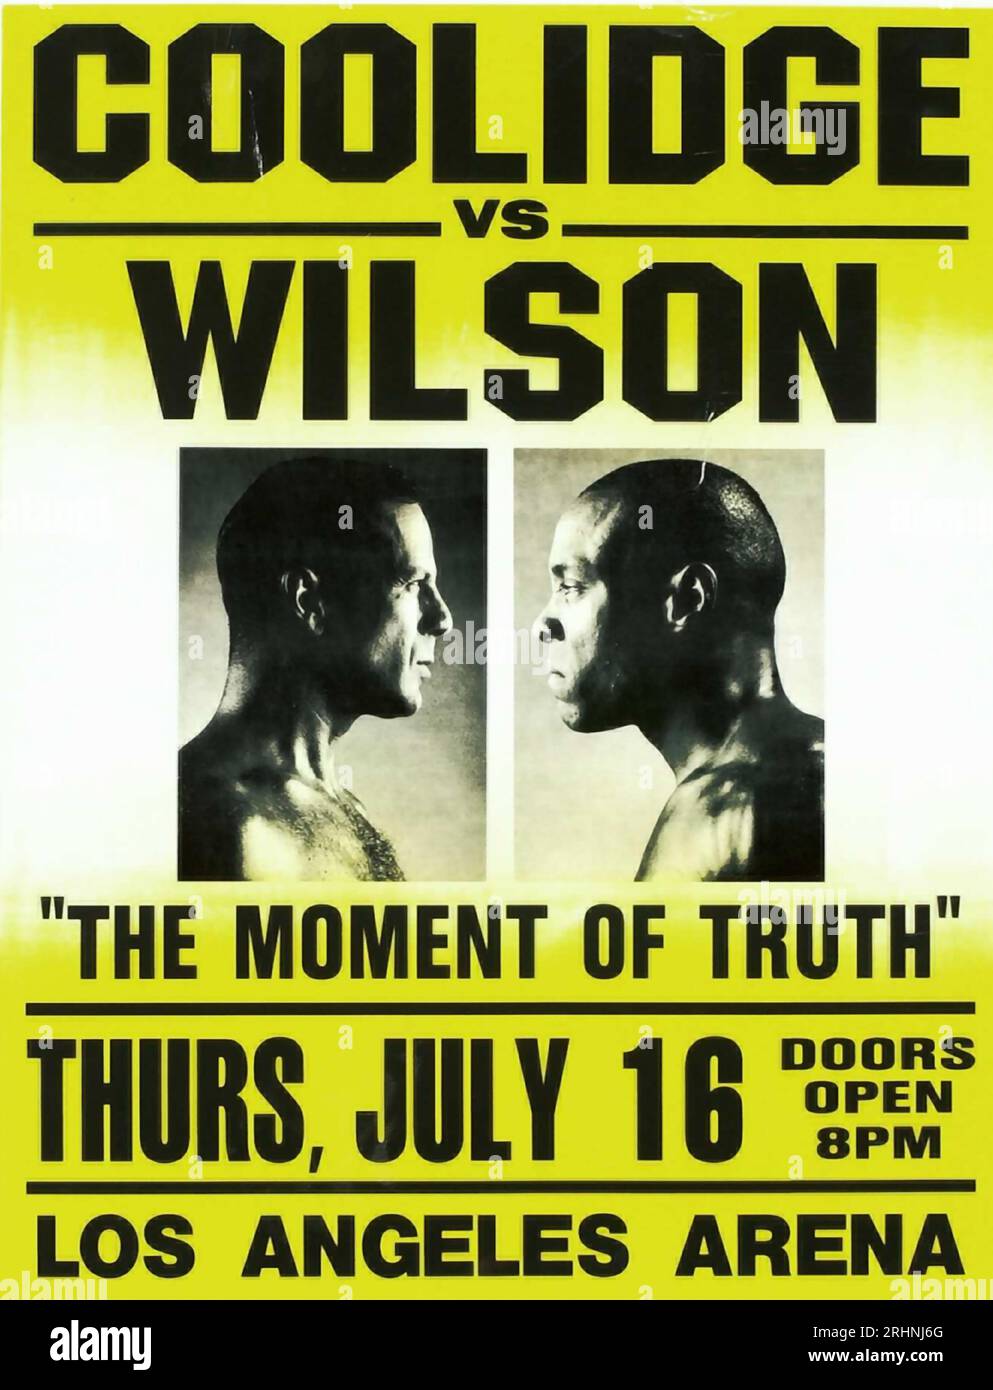 Pulp Fiction Miramax 1994 Boxing Poster Bruce Willis Coolidge VS Wilson Quentin Tarantino Stock Photo